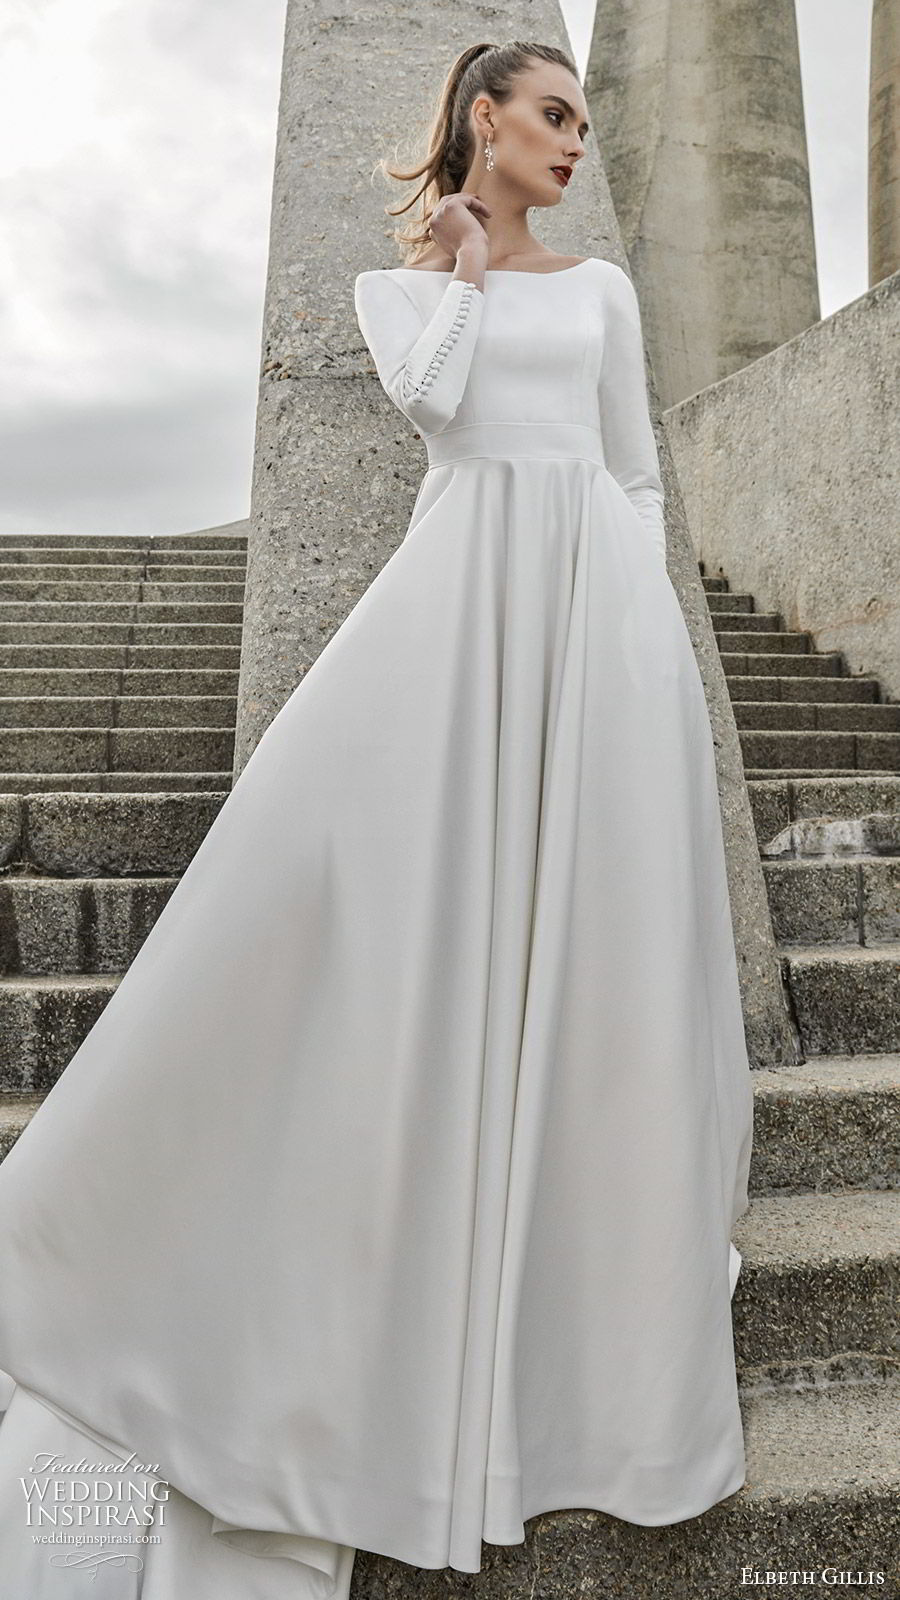 elbeth gillis 2020 bridal long sleeves bataeu neckline minimally embellished a line ball gown wedding dress (9) clean minimal chic princess modern cathedral train mv